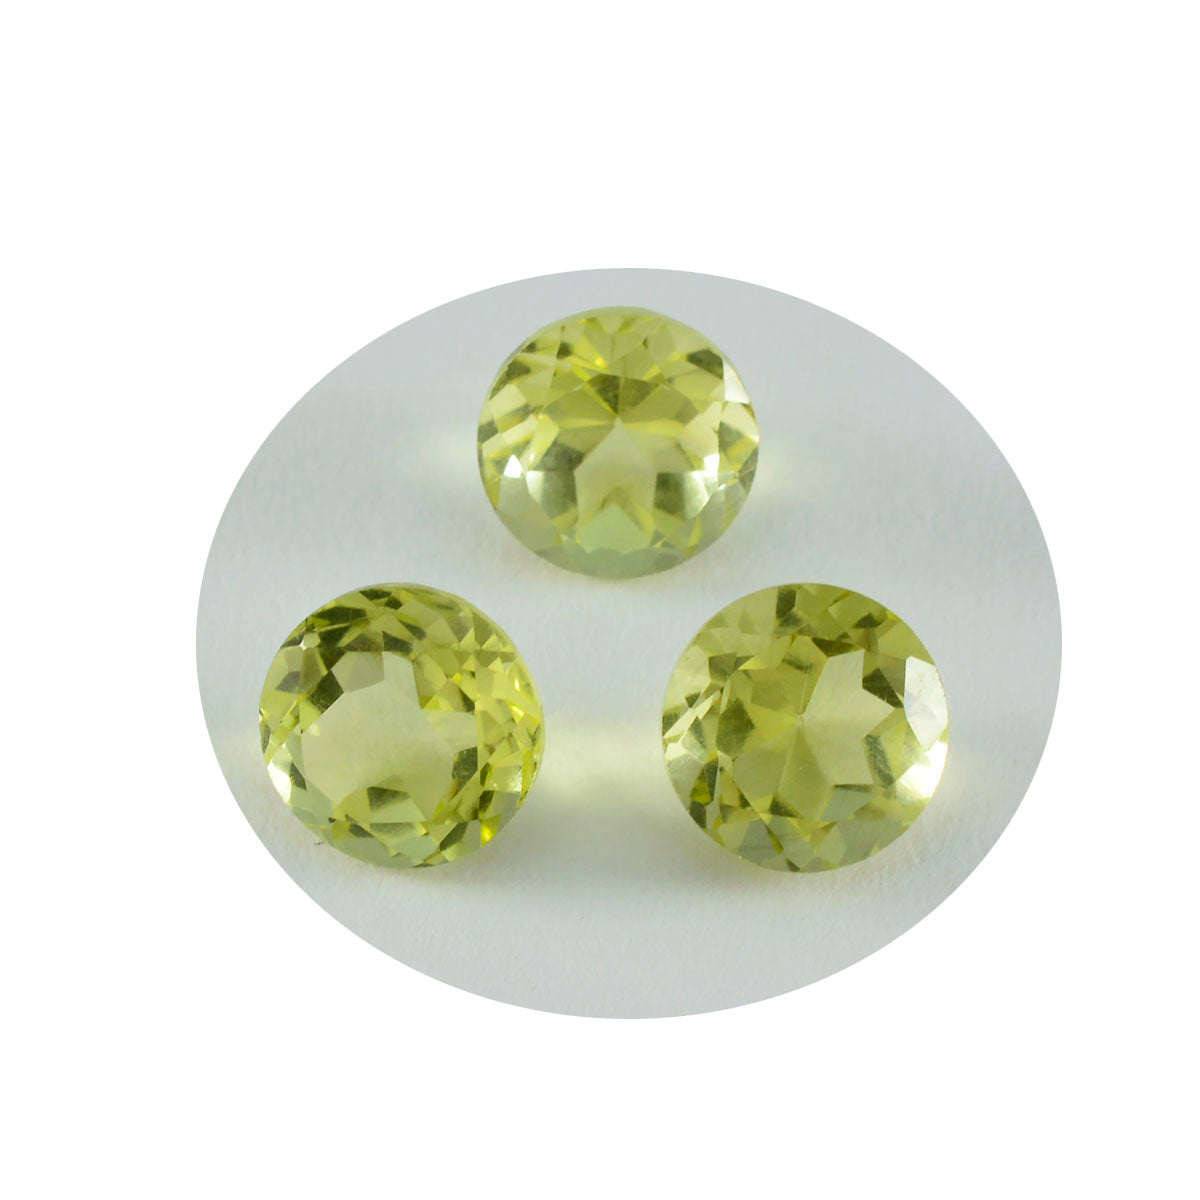 Riyogems 1PC Yellow Lemon Quartz Faceted 9x9 mm Round Shape superb Quality Loose Gemstone